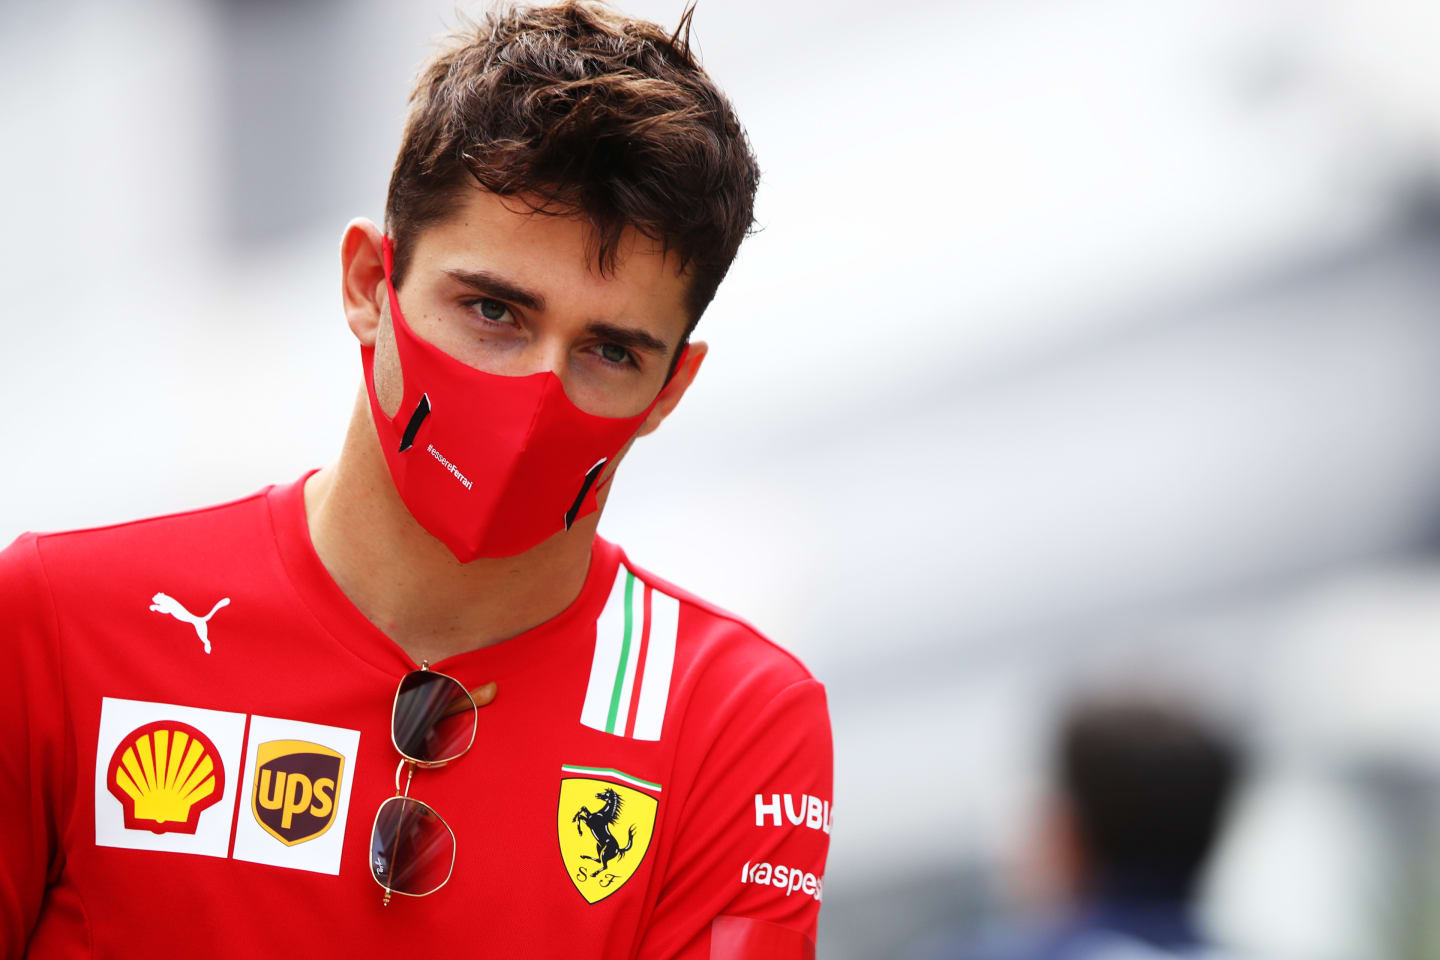 SOCHI, RUSSIA - SEPTEMBER 26: Charles Leclerc of Monaco and Ferrari walks in the Paddock before